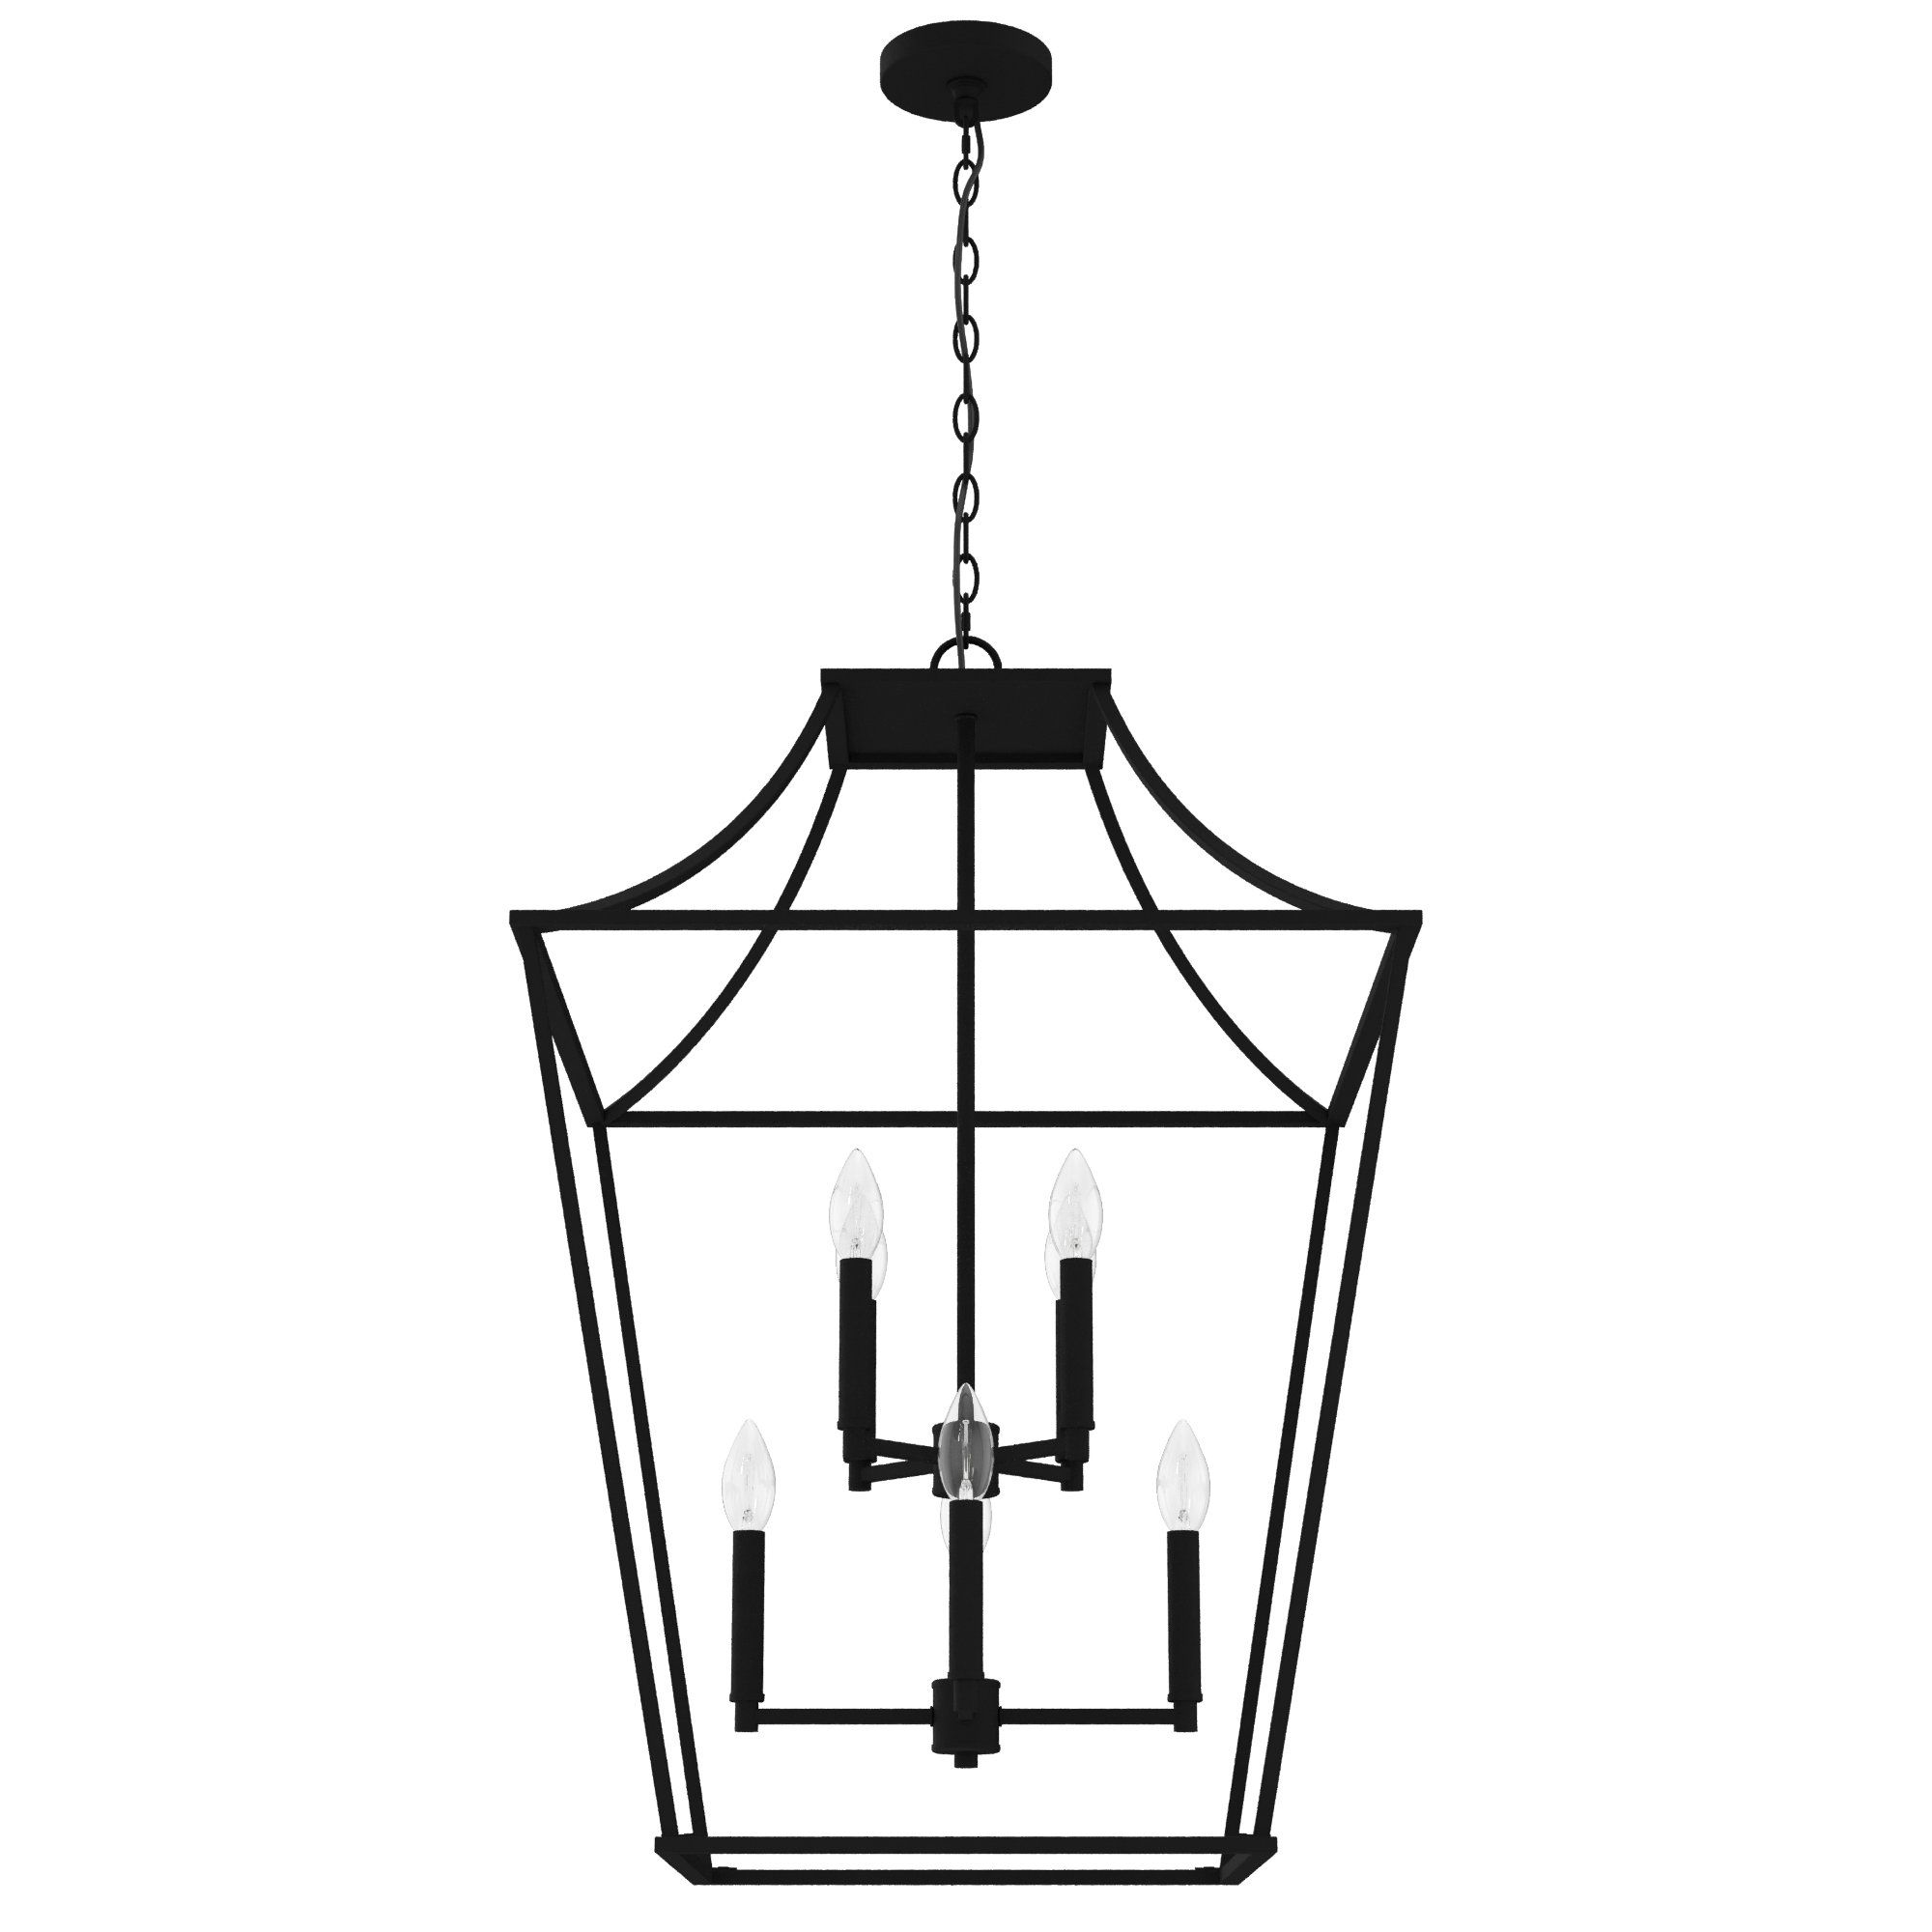 Wayfair Regarding 18 Inch Lantern Chandeliers (View 13 of 15)